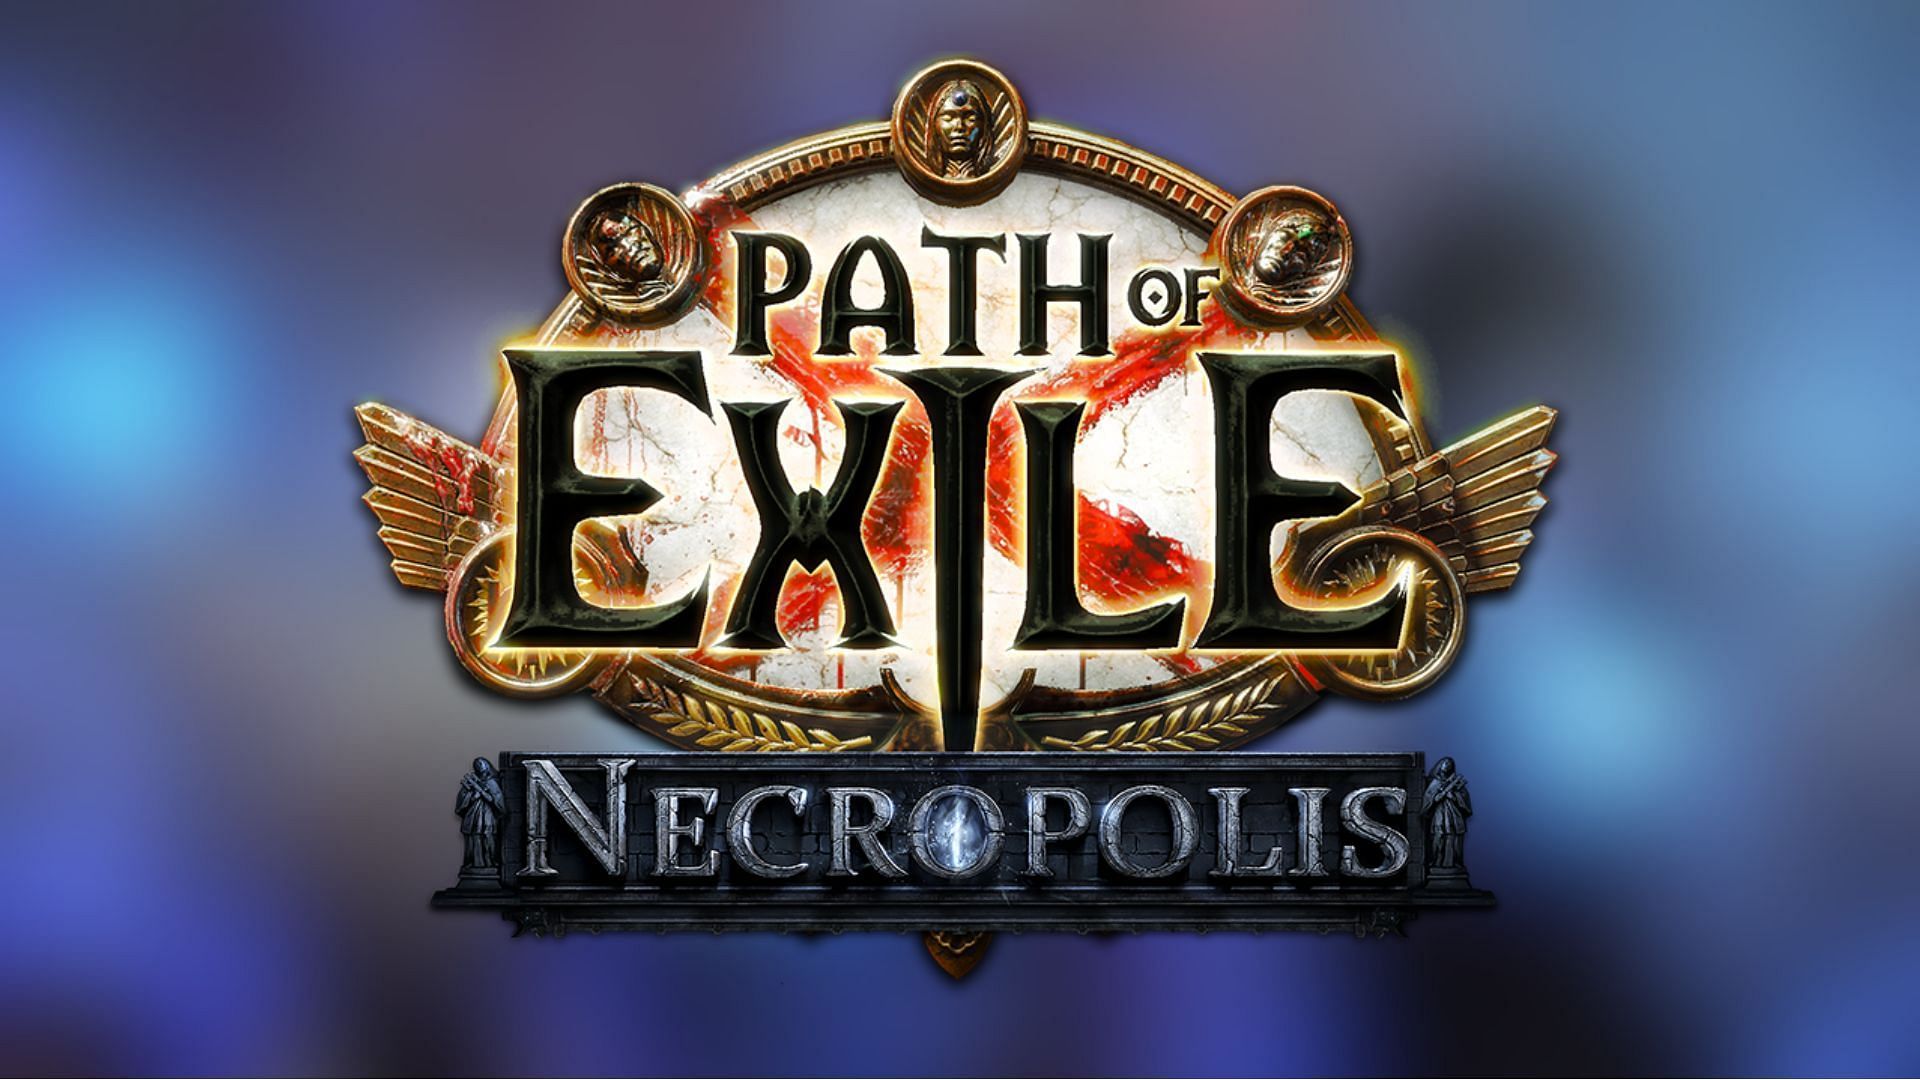 Necropolis League in Path of Exile